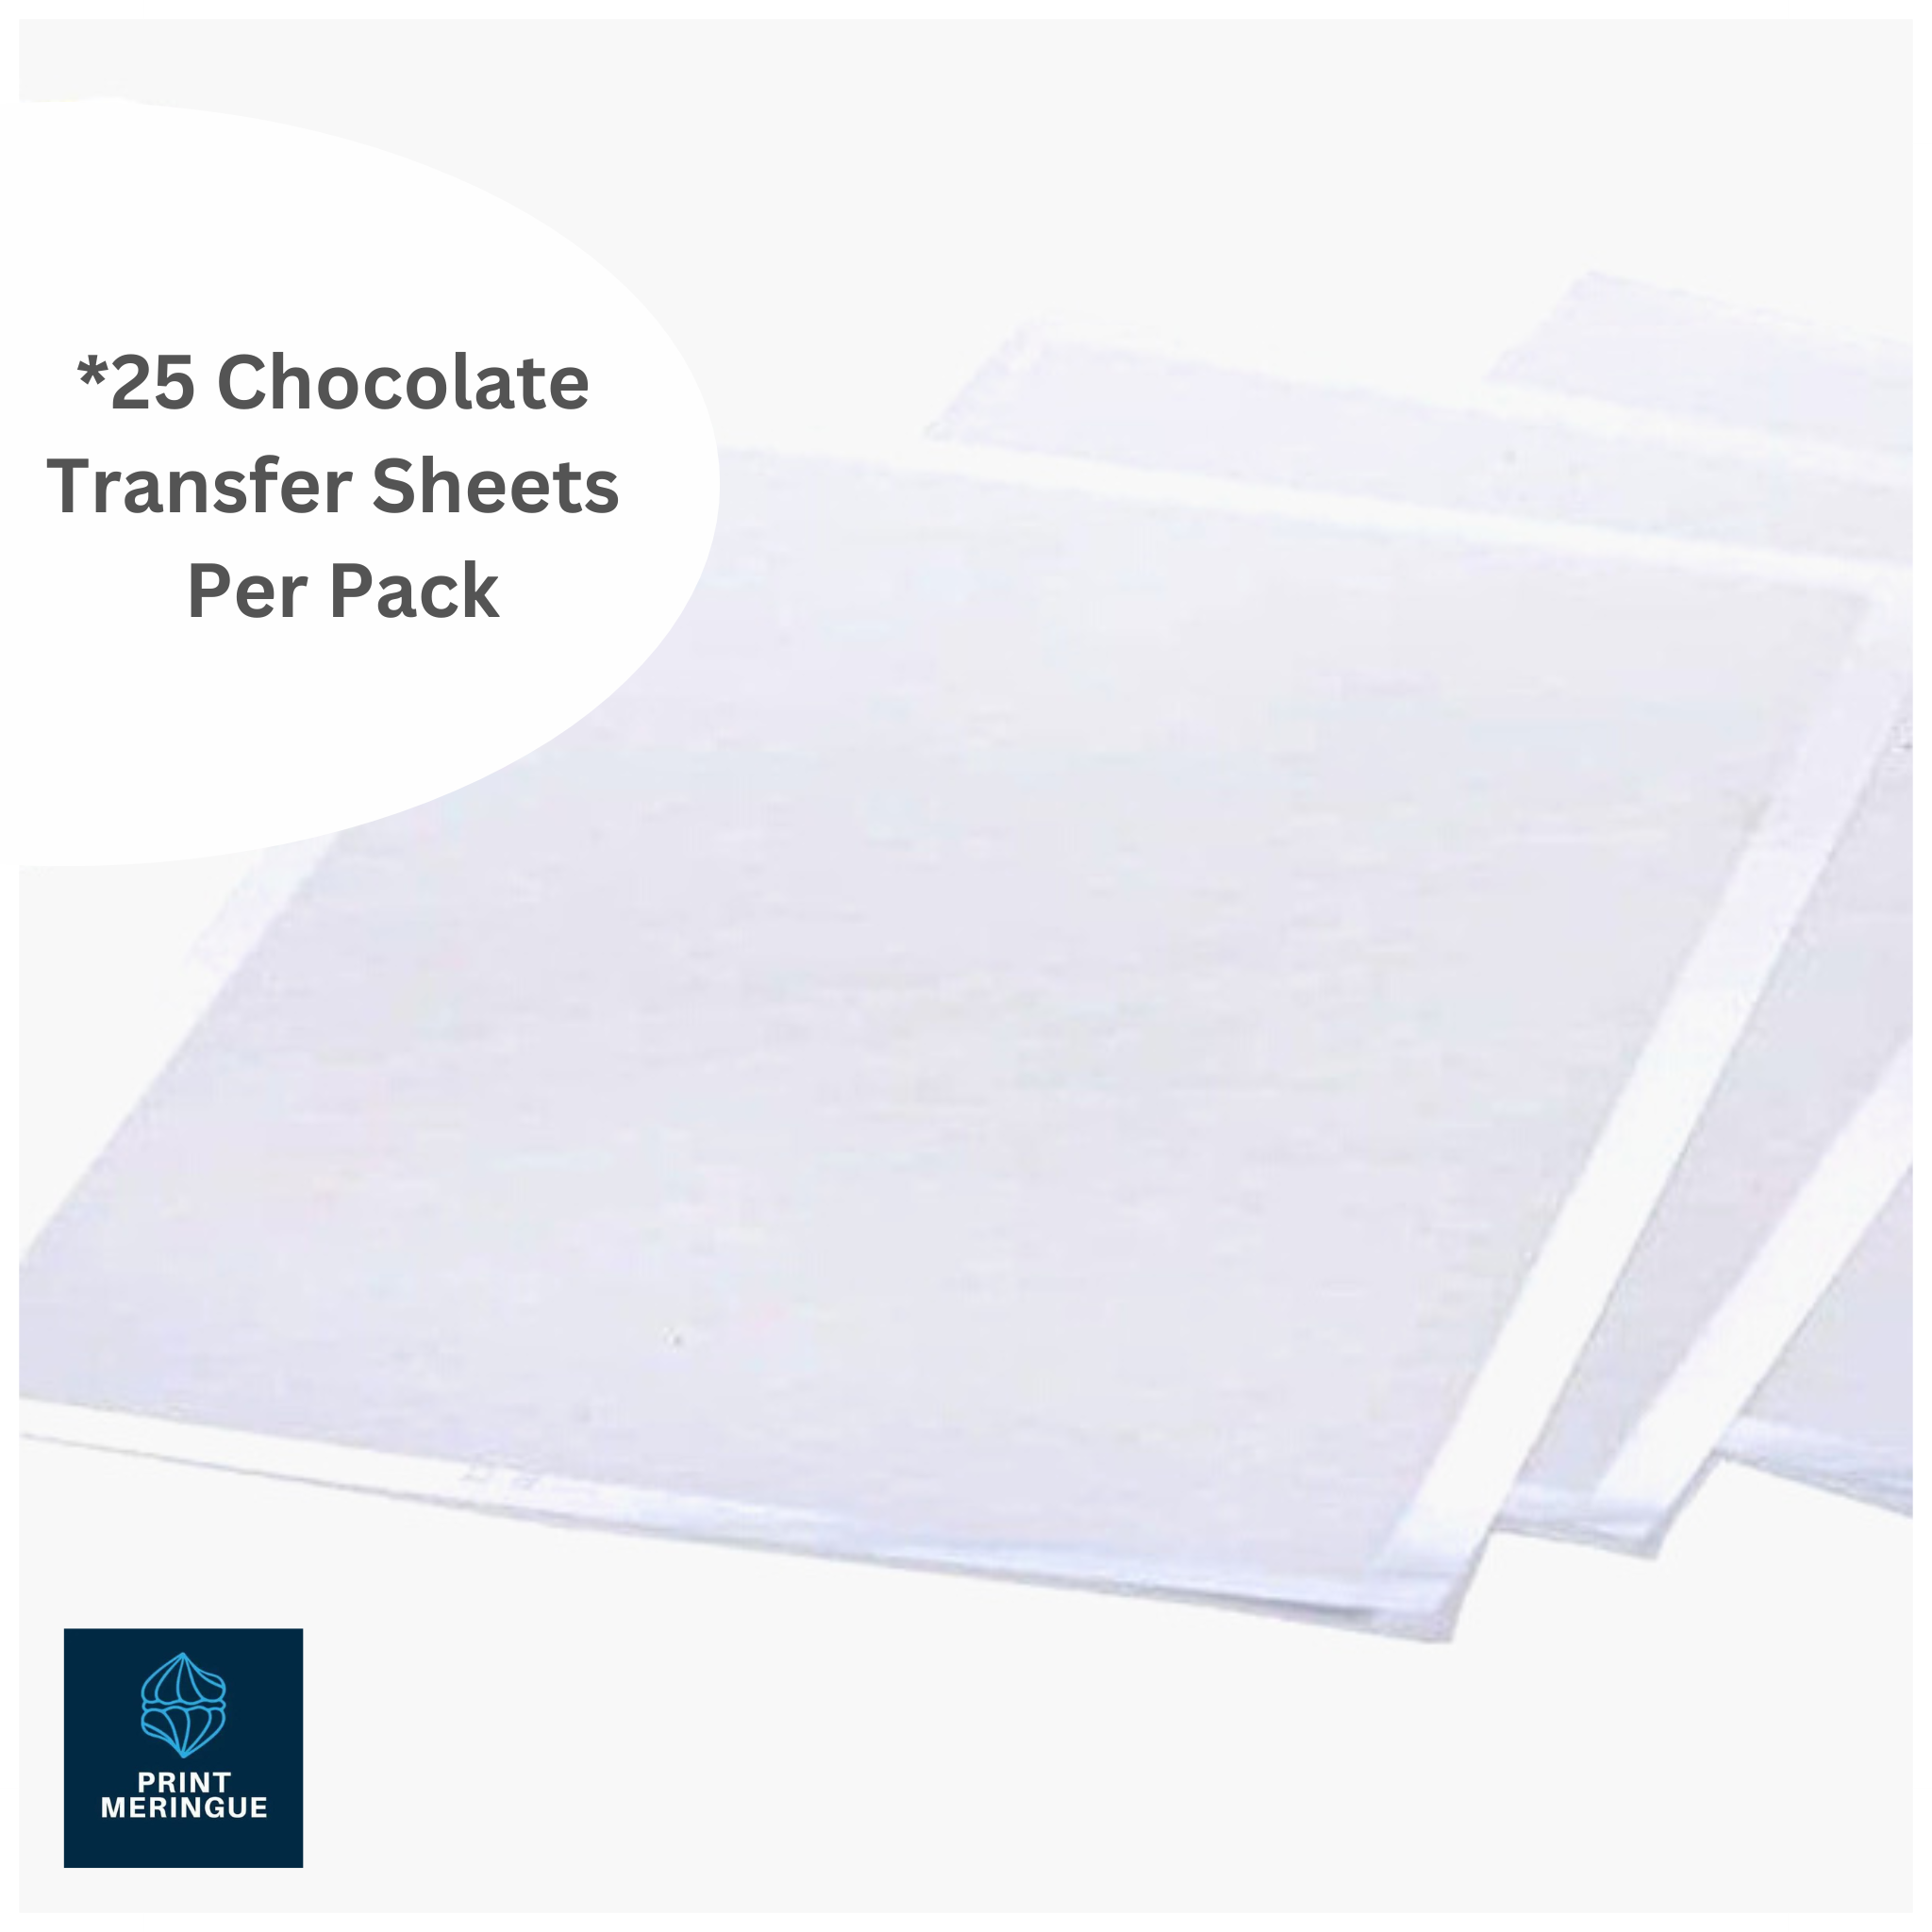 Chocolate Transfer Sheets Packs A4 E71 Free – PrintMeringue